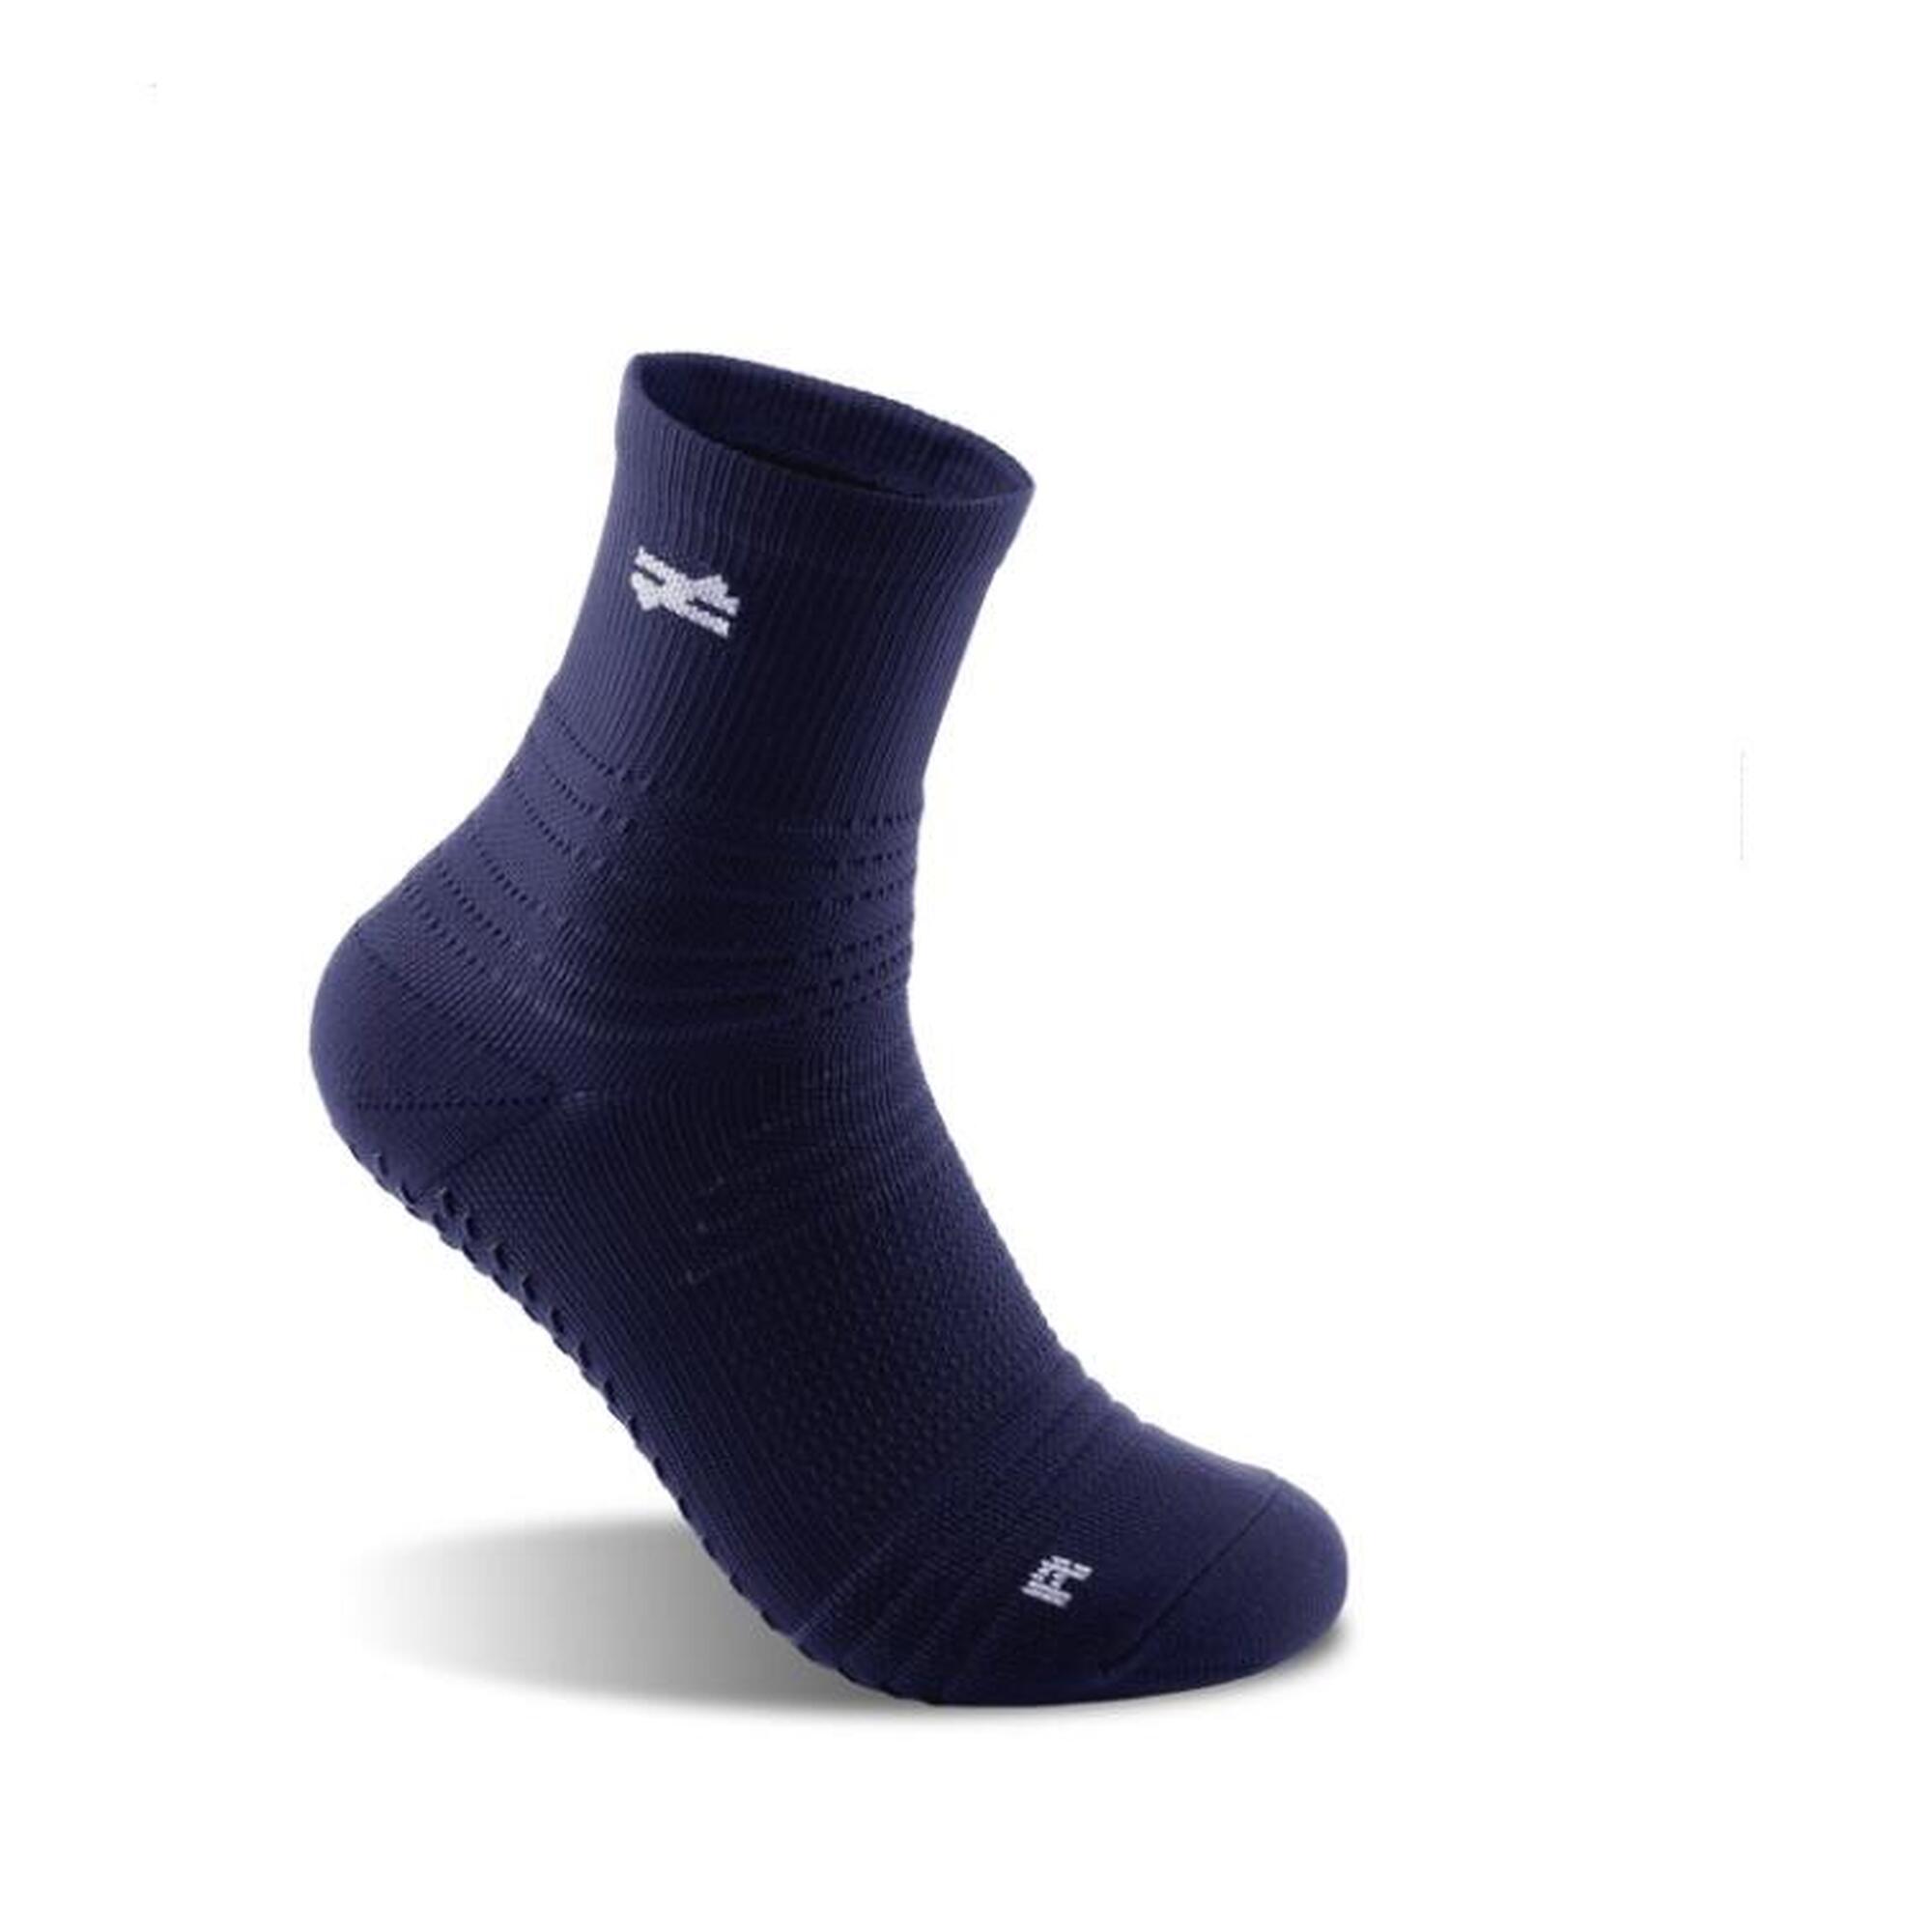 G-ZOX Tech 足球防滑襪 3對裝 - (白色 x 2 + 藍色 x 1 - 中碼)